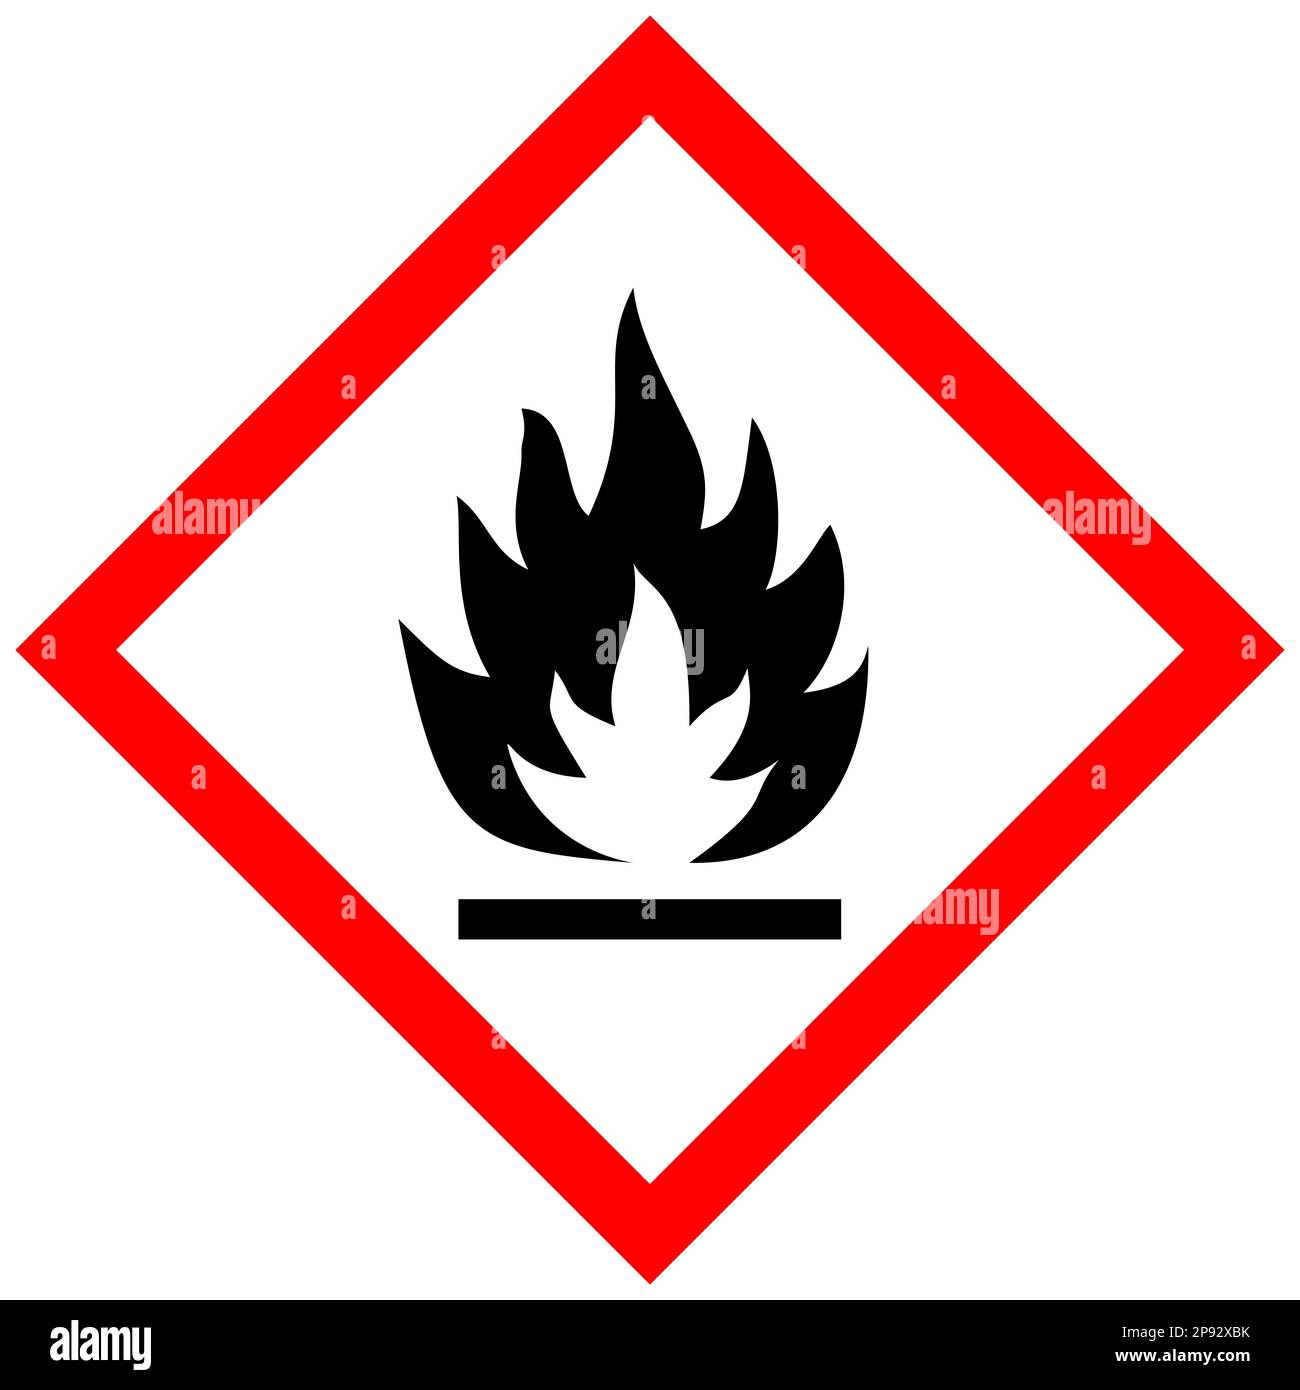 Flammable hazard sign Stock Photo